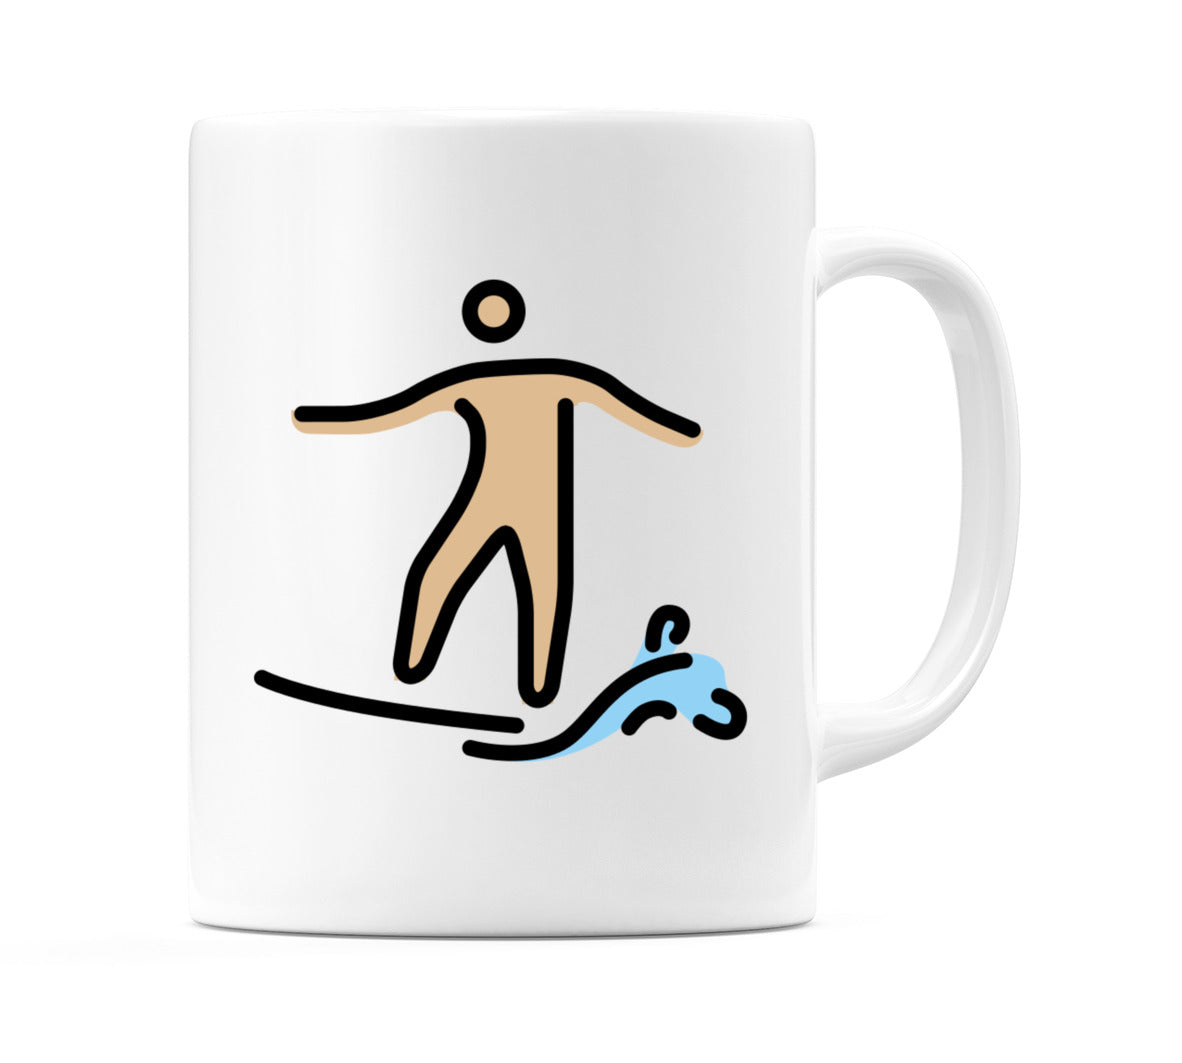 Person Surfing: Medium-Light Skin Tone Emoji Mug